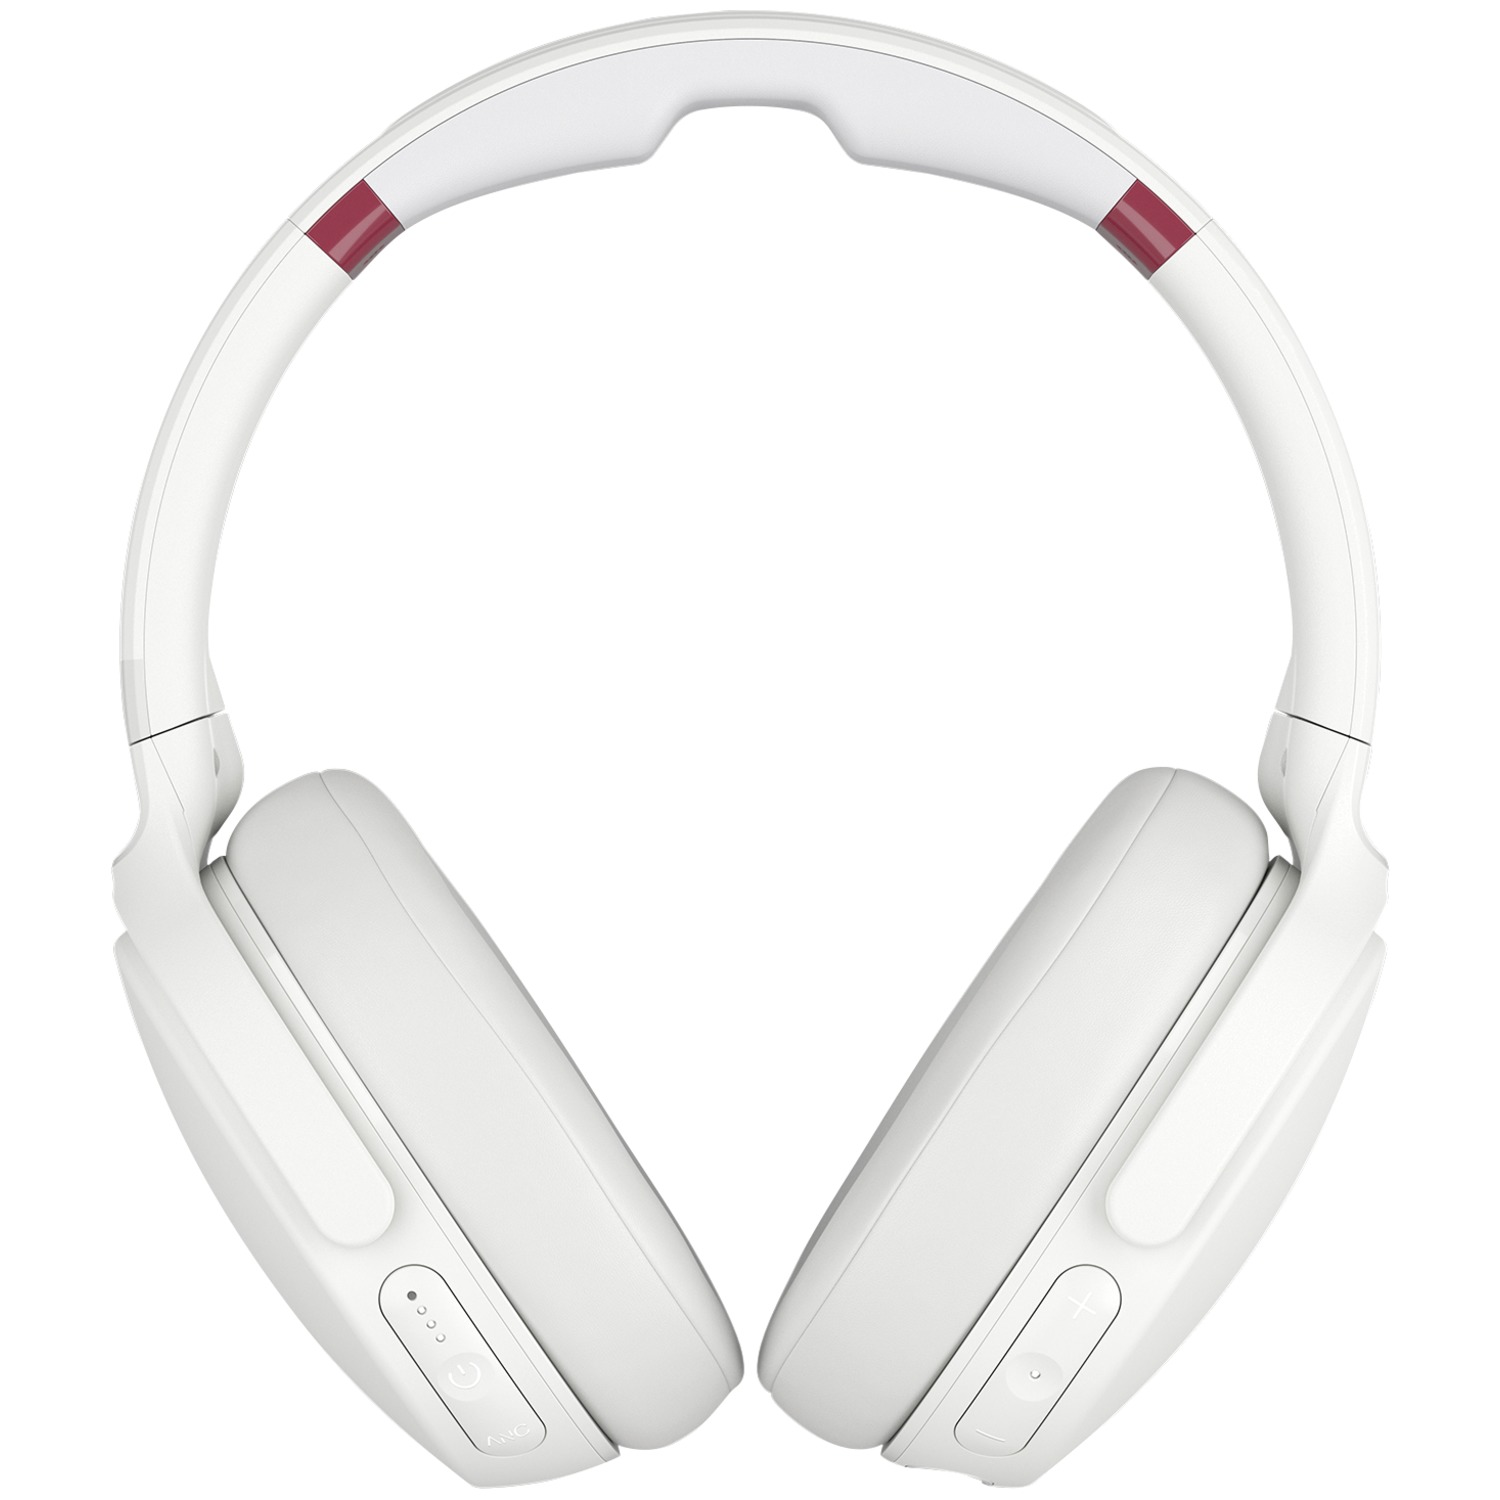 Skullcandy Venue on-ear Active Noise Canceling Bluetooth Wireless Headphones in Gray & Crimson - image 5 of 8